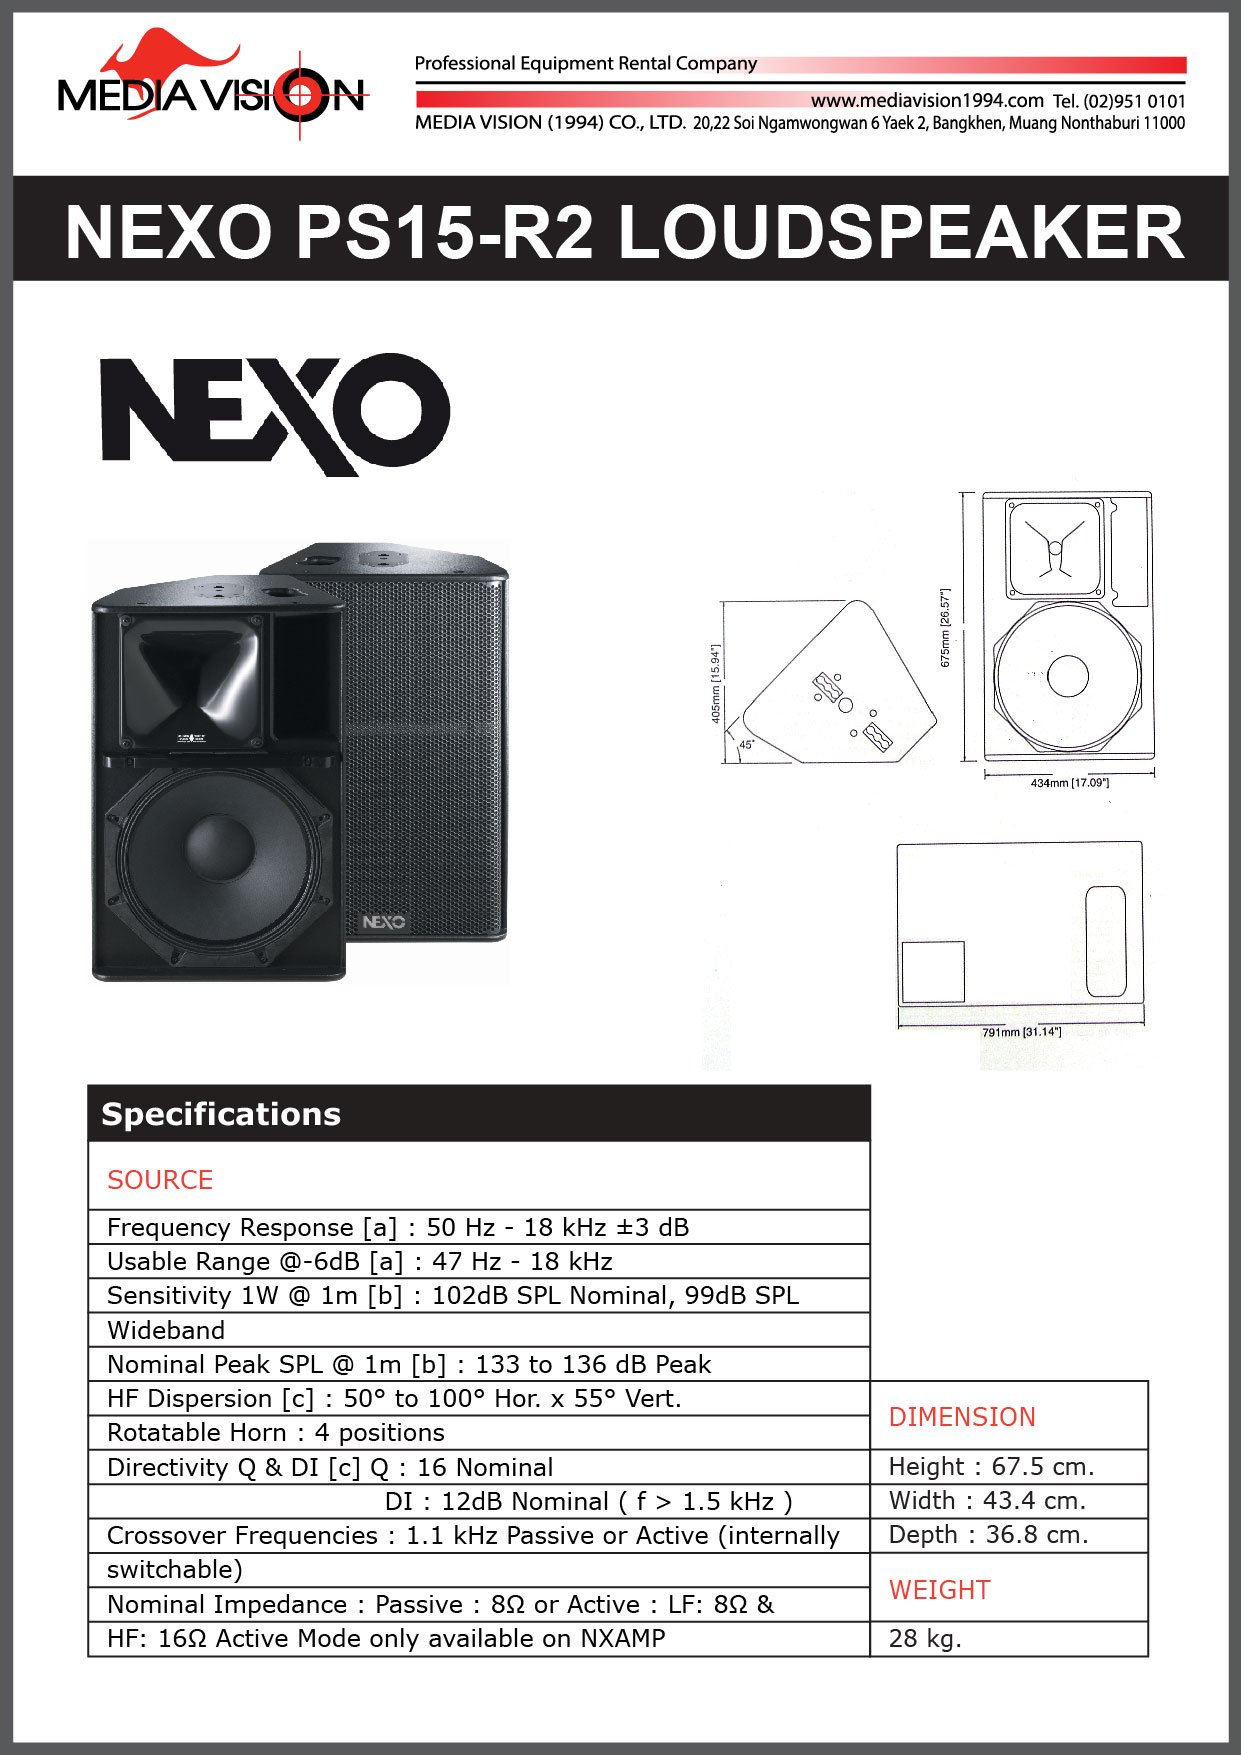 NEXO PS15-R2 LOUDSPEAKER